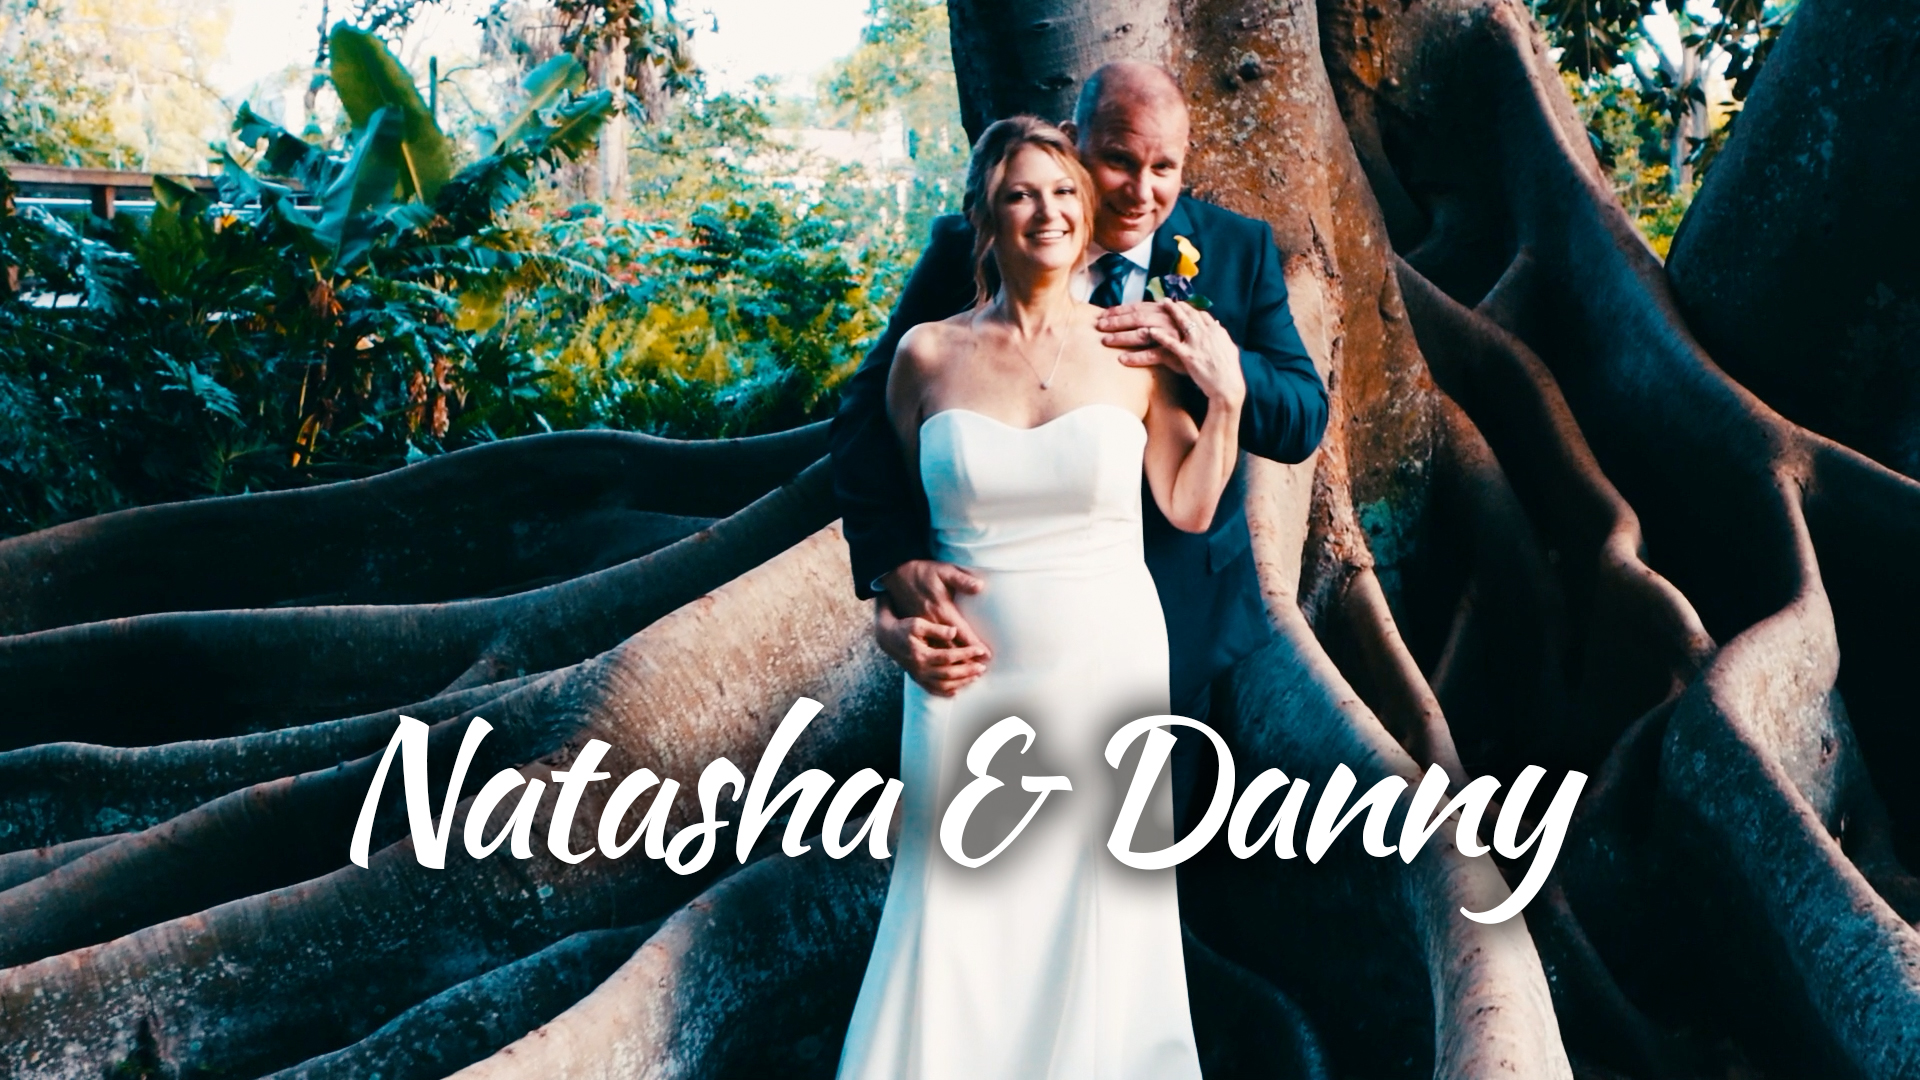 Natasha & Danny Wedding – Trailer